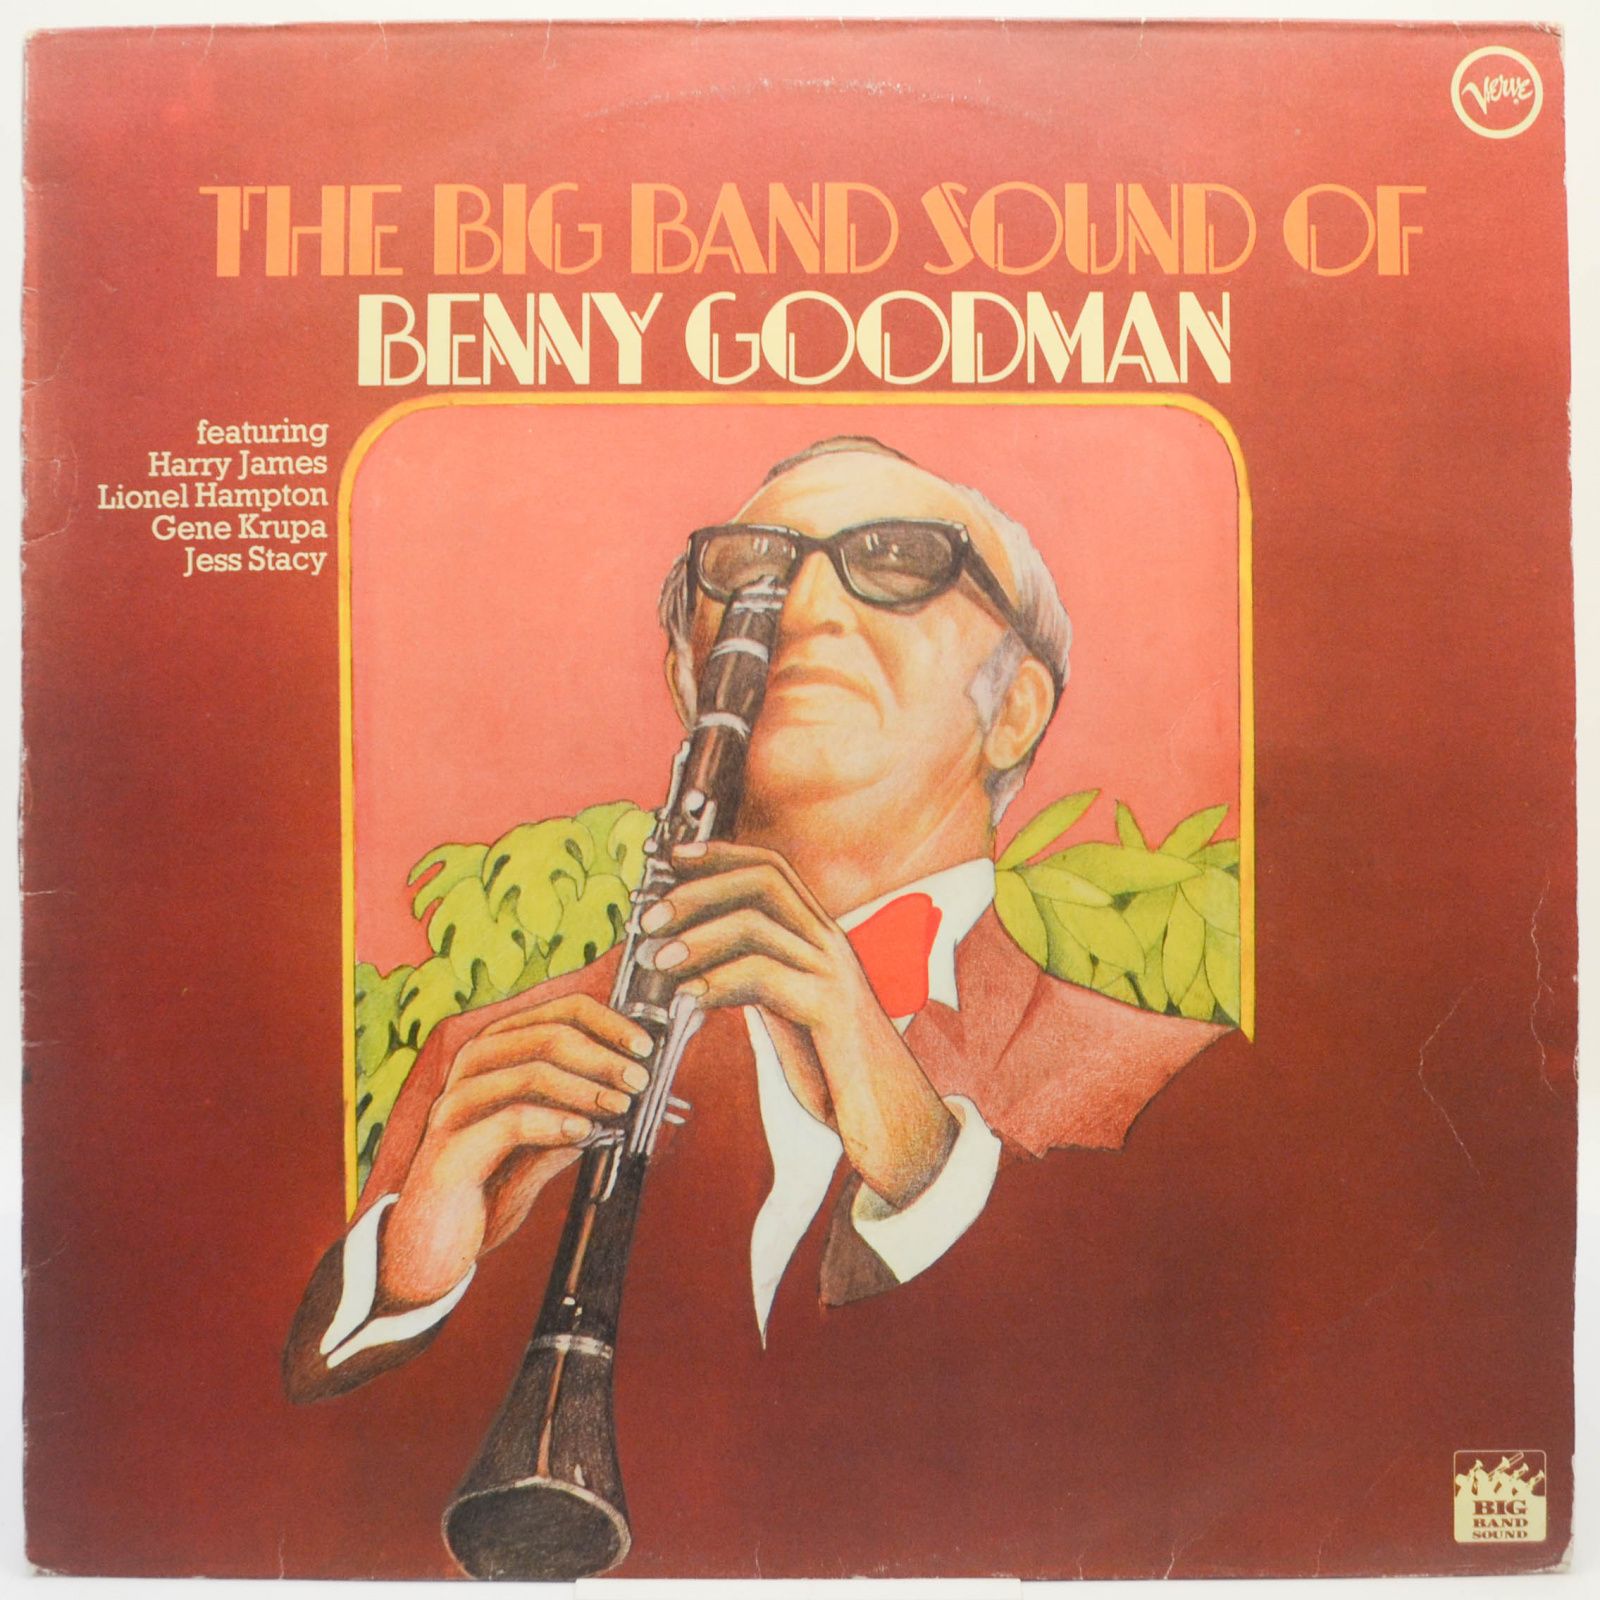 The Big Band Sound Of Benny Goodman (UK), 19??